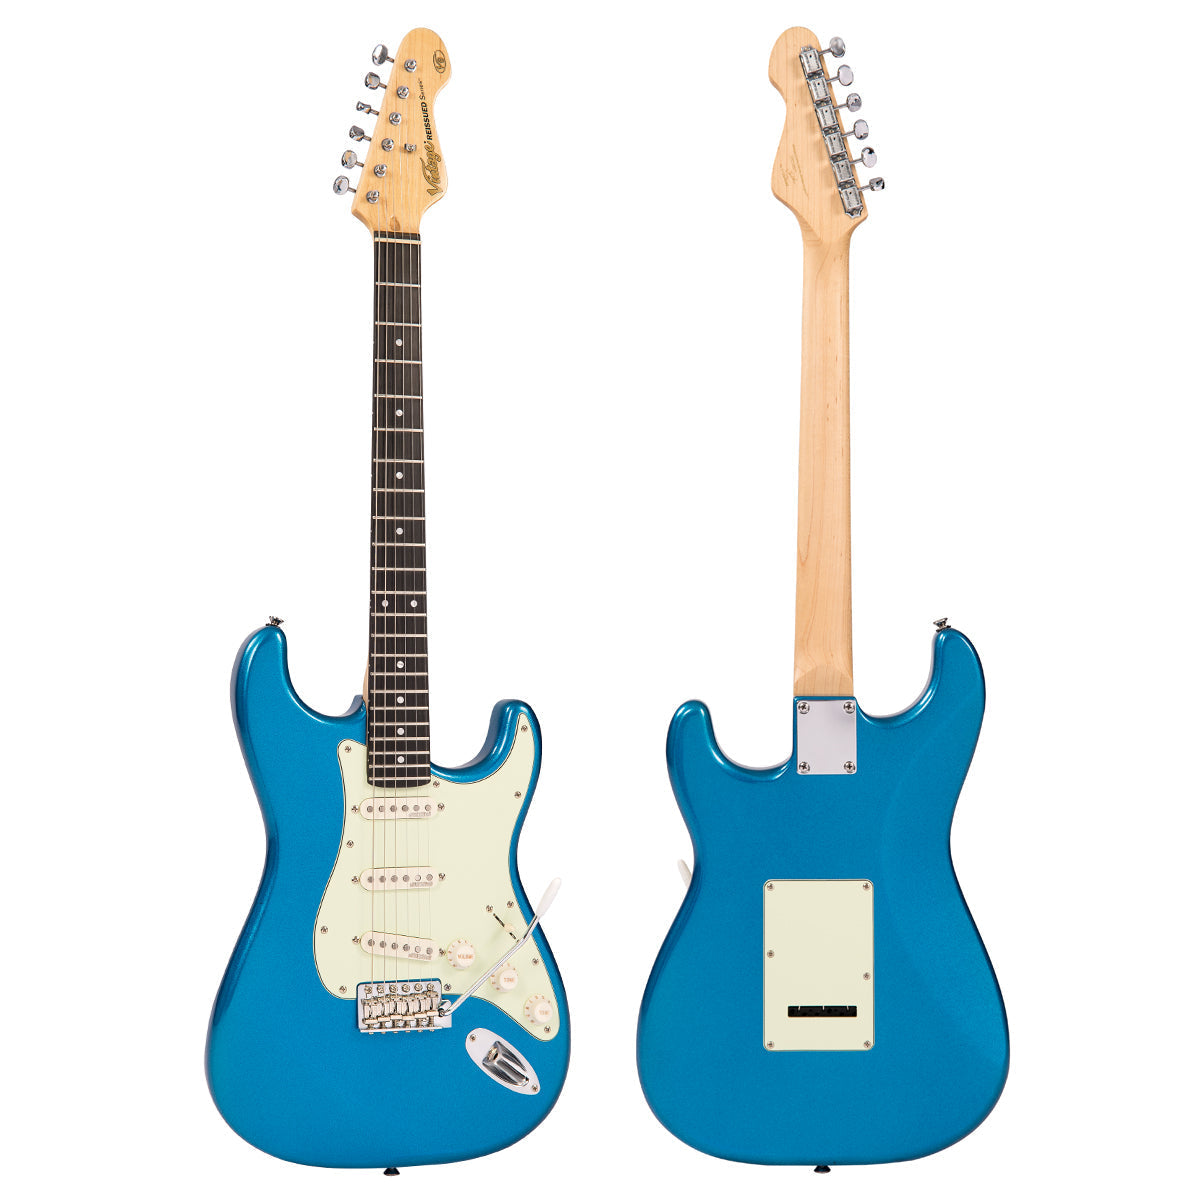 Vintage V6 ReIssued Electric Guitar ~ Candy Apple Blue, Electric Guitar for sale at Richards Guitars.